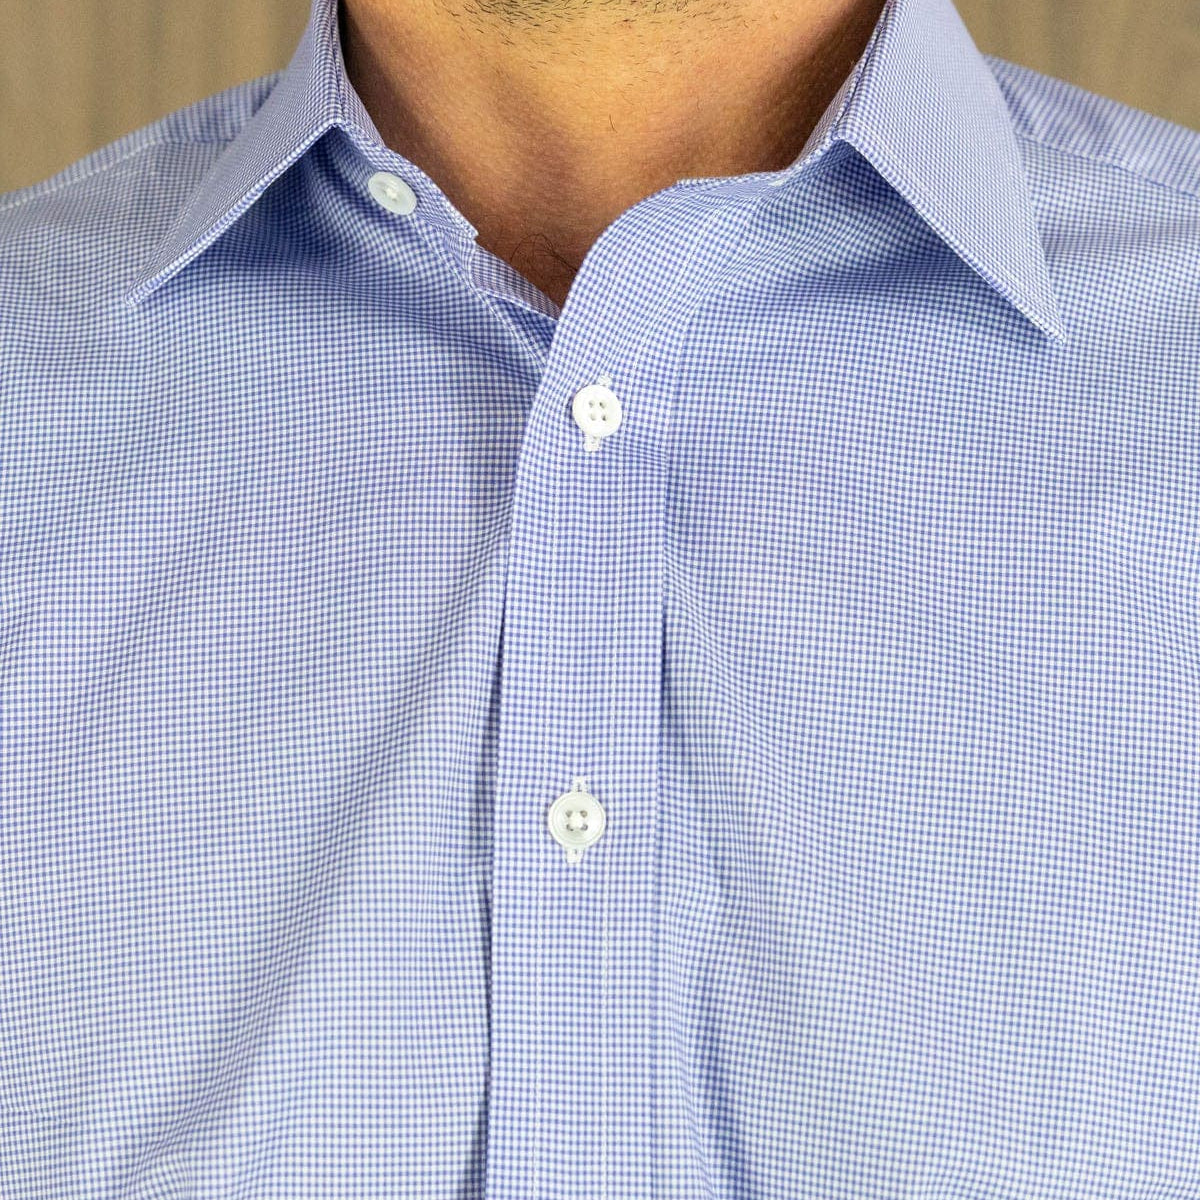 Classic Fit, Classic Collar, 2 Button Cuff Shirt in a Blue & White Shepherds Check Poplin Cotton